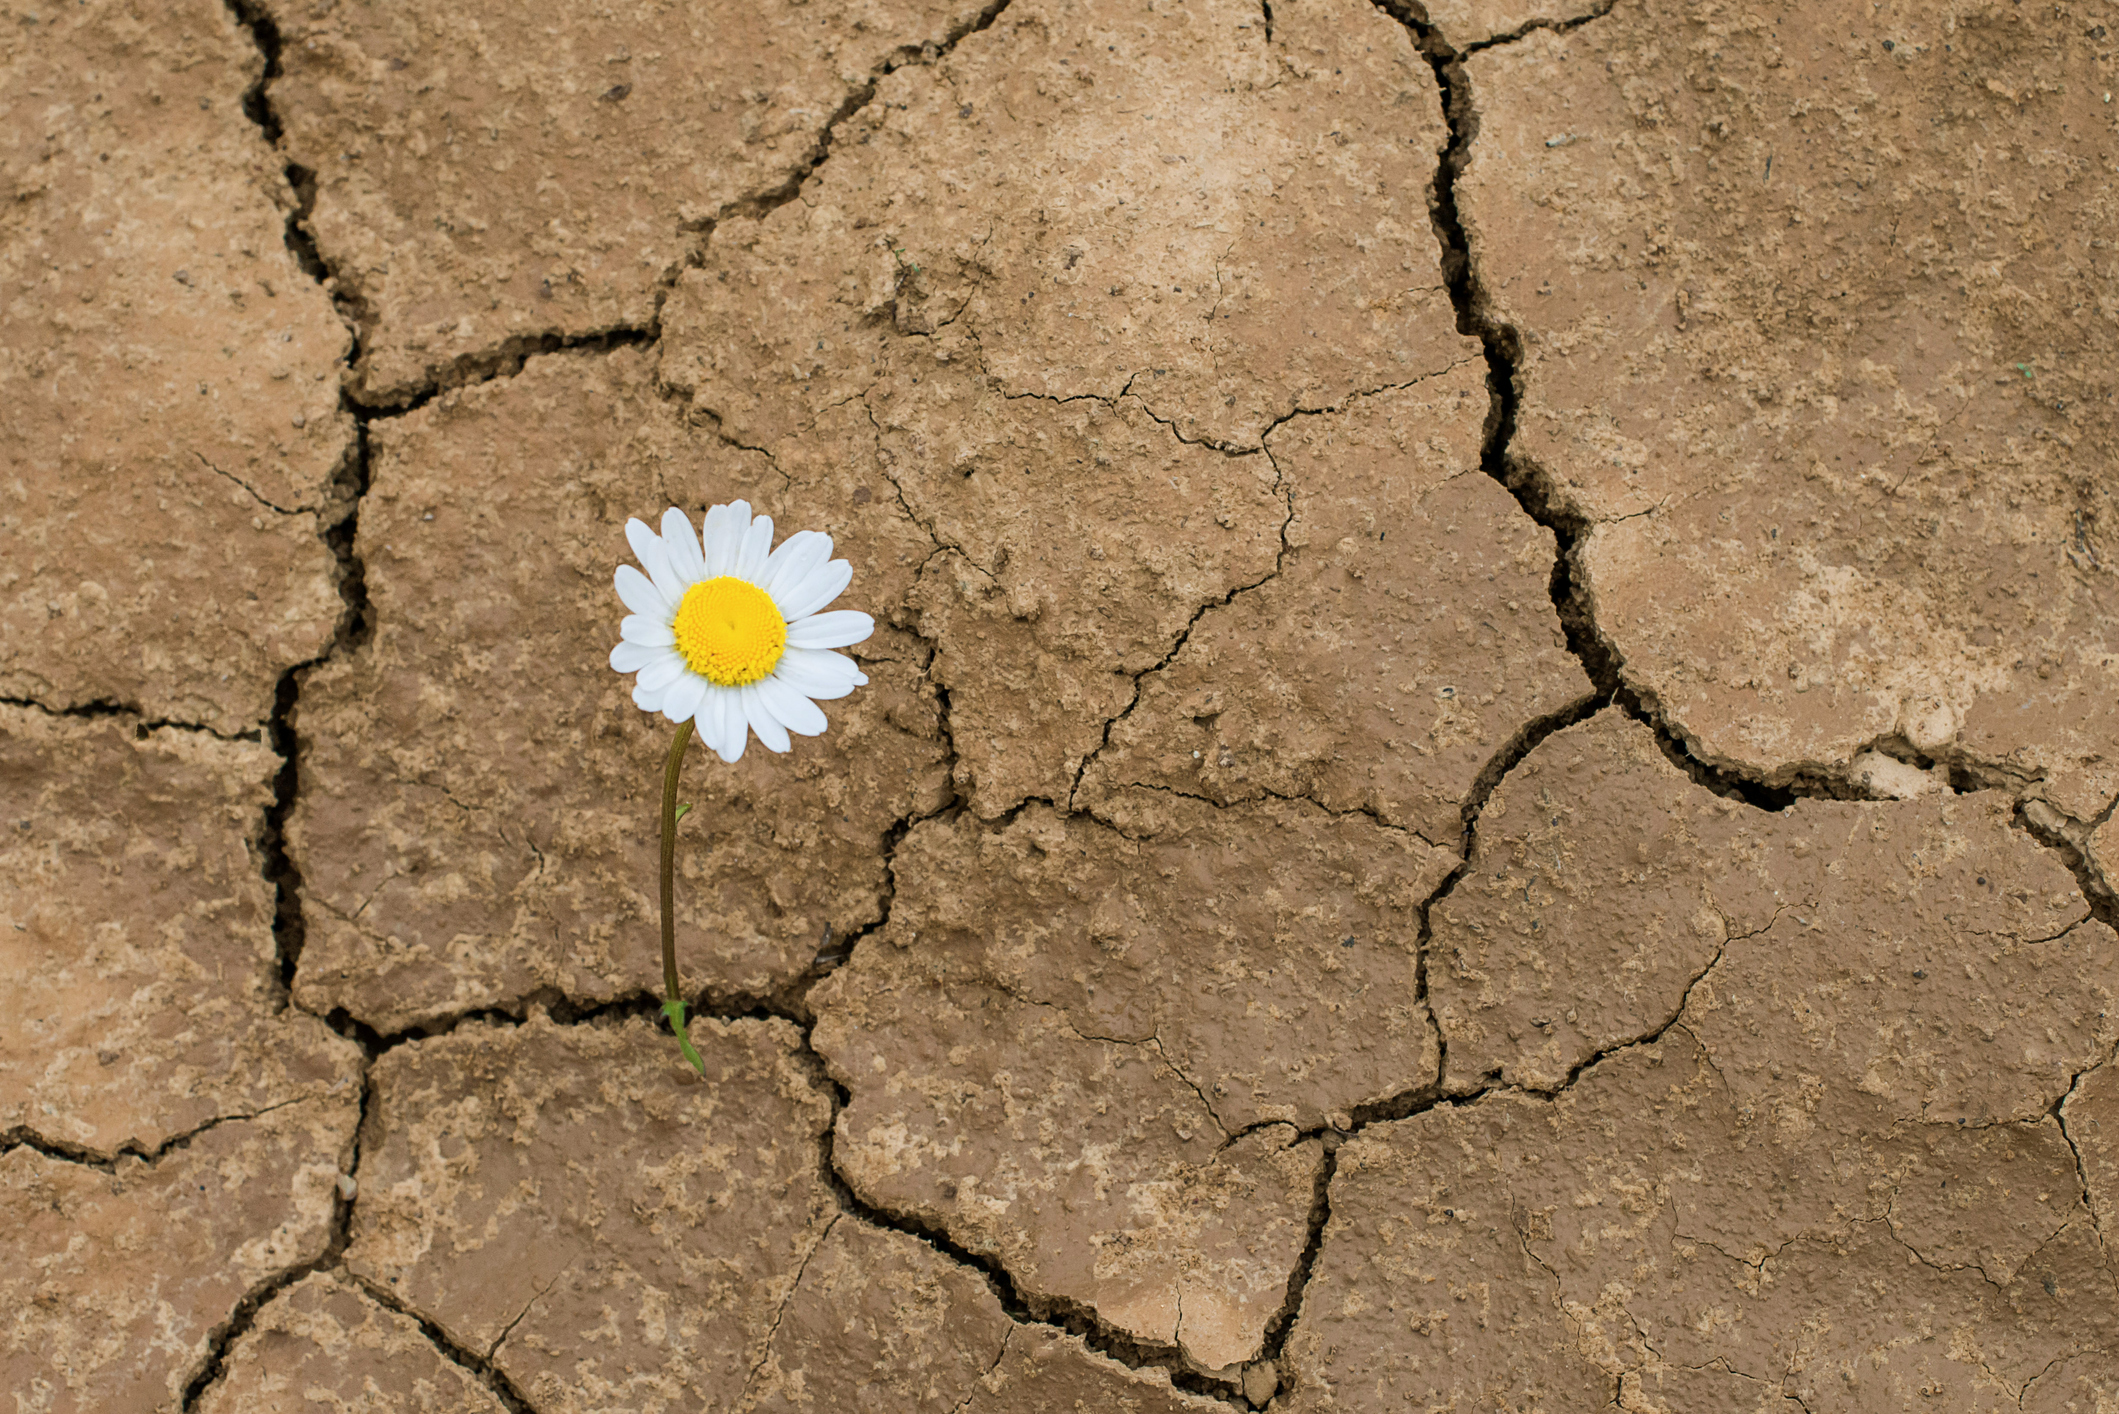 A daisy in the desert